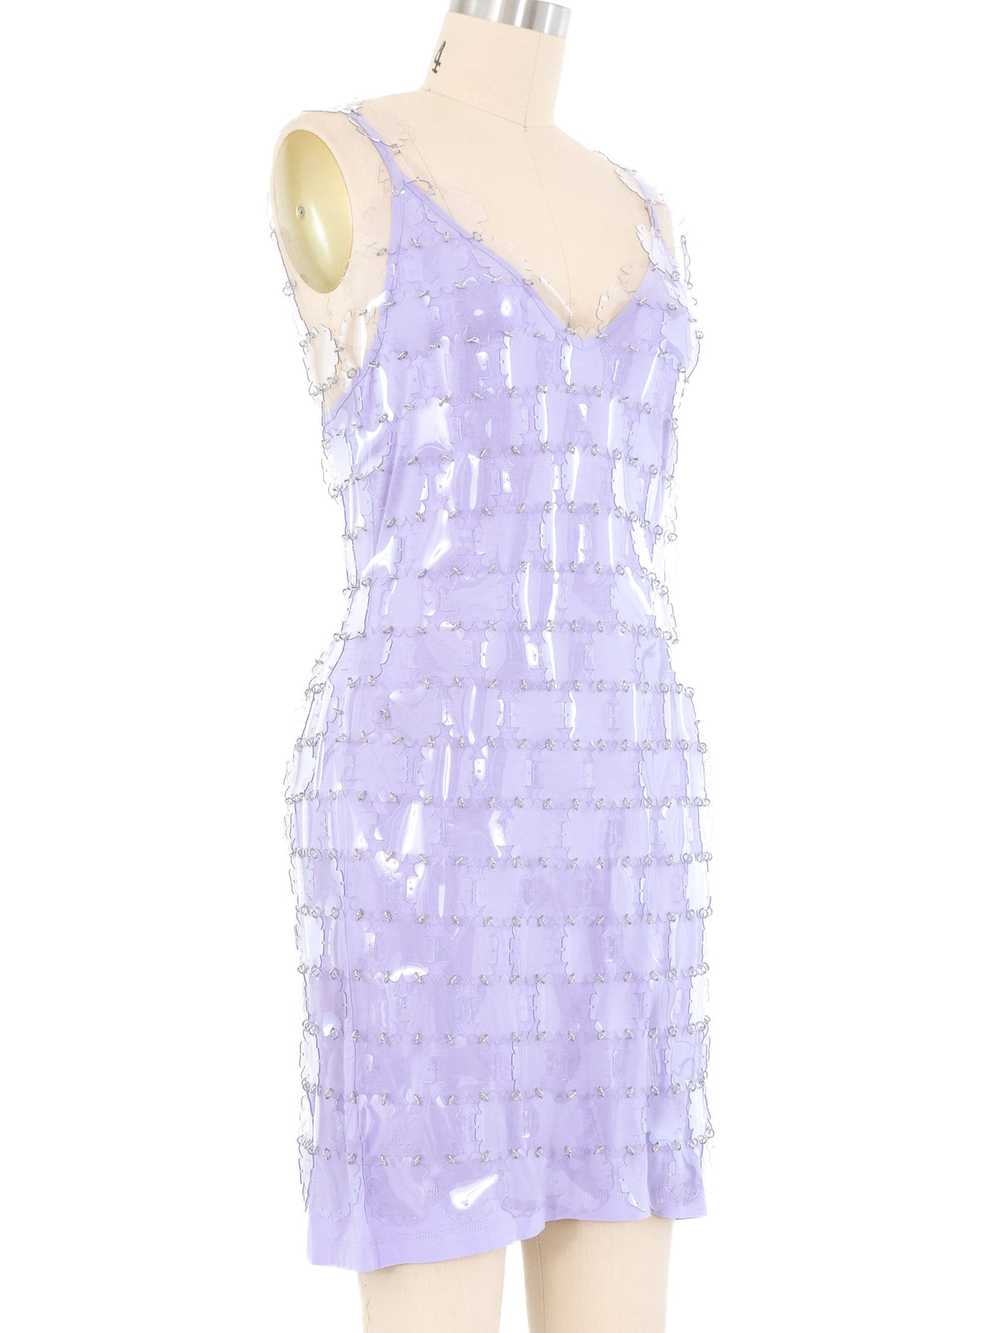 Paco Rabanne PVC Floral Mini Dress - image 3